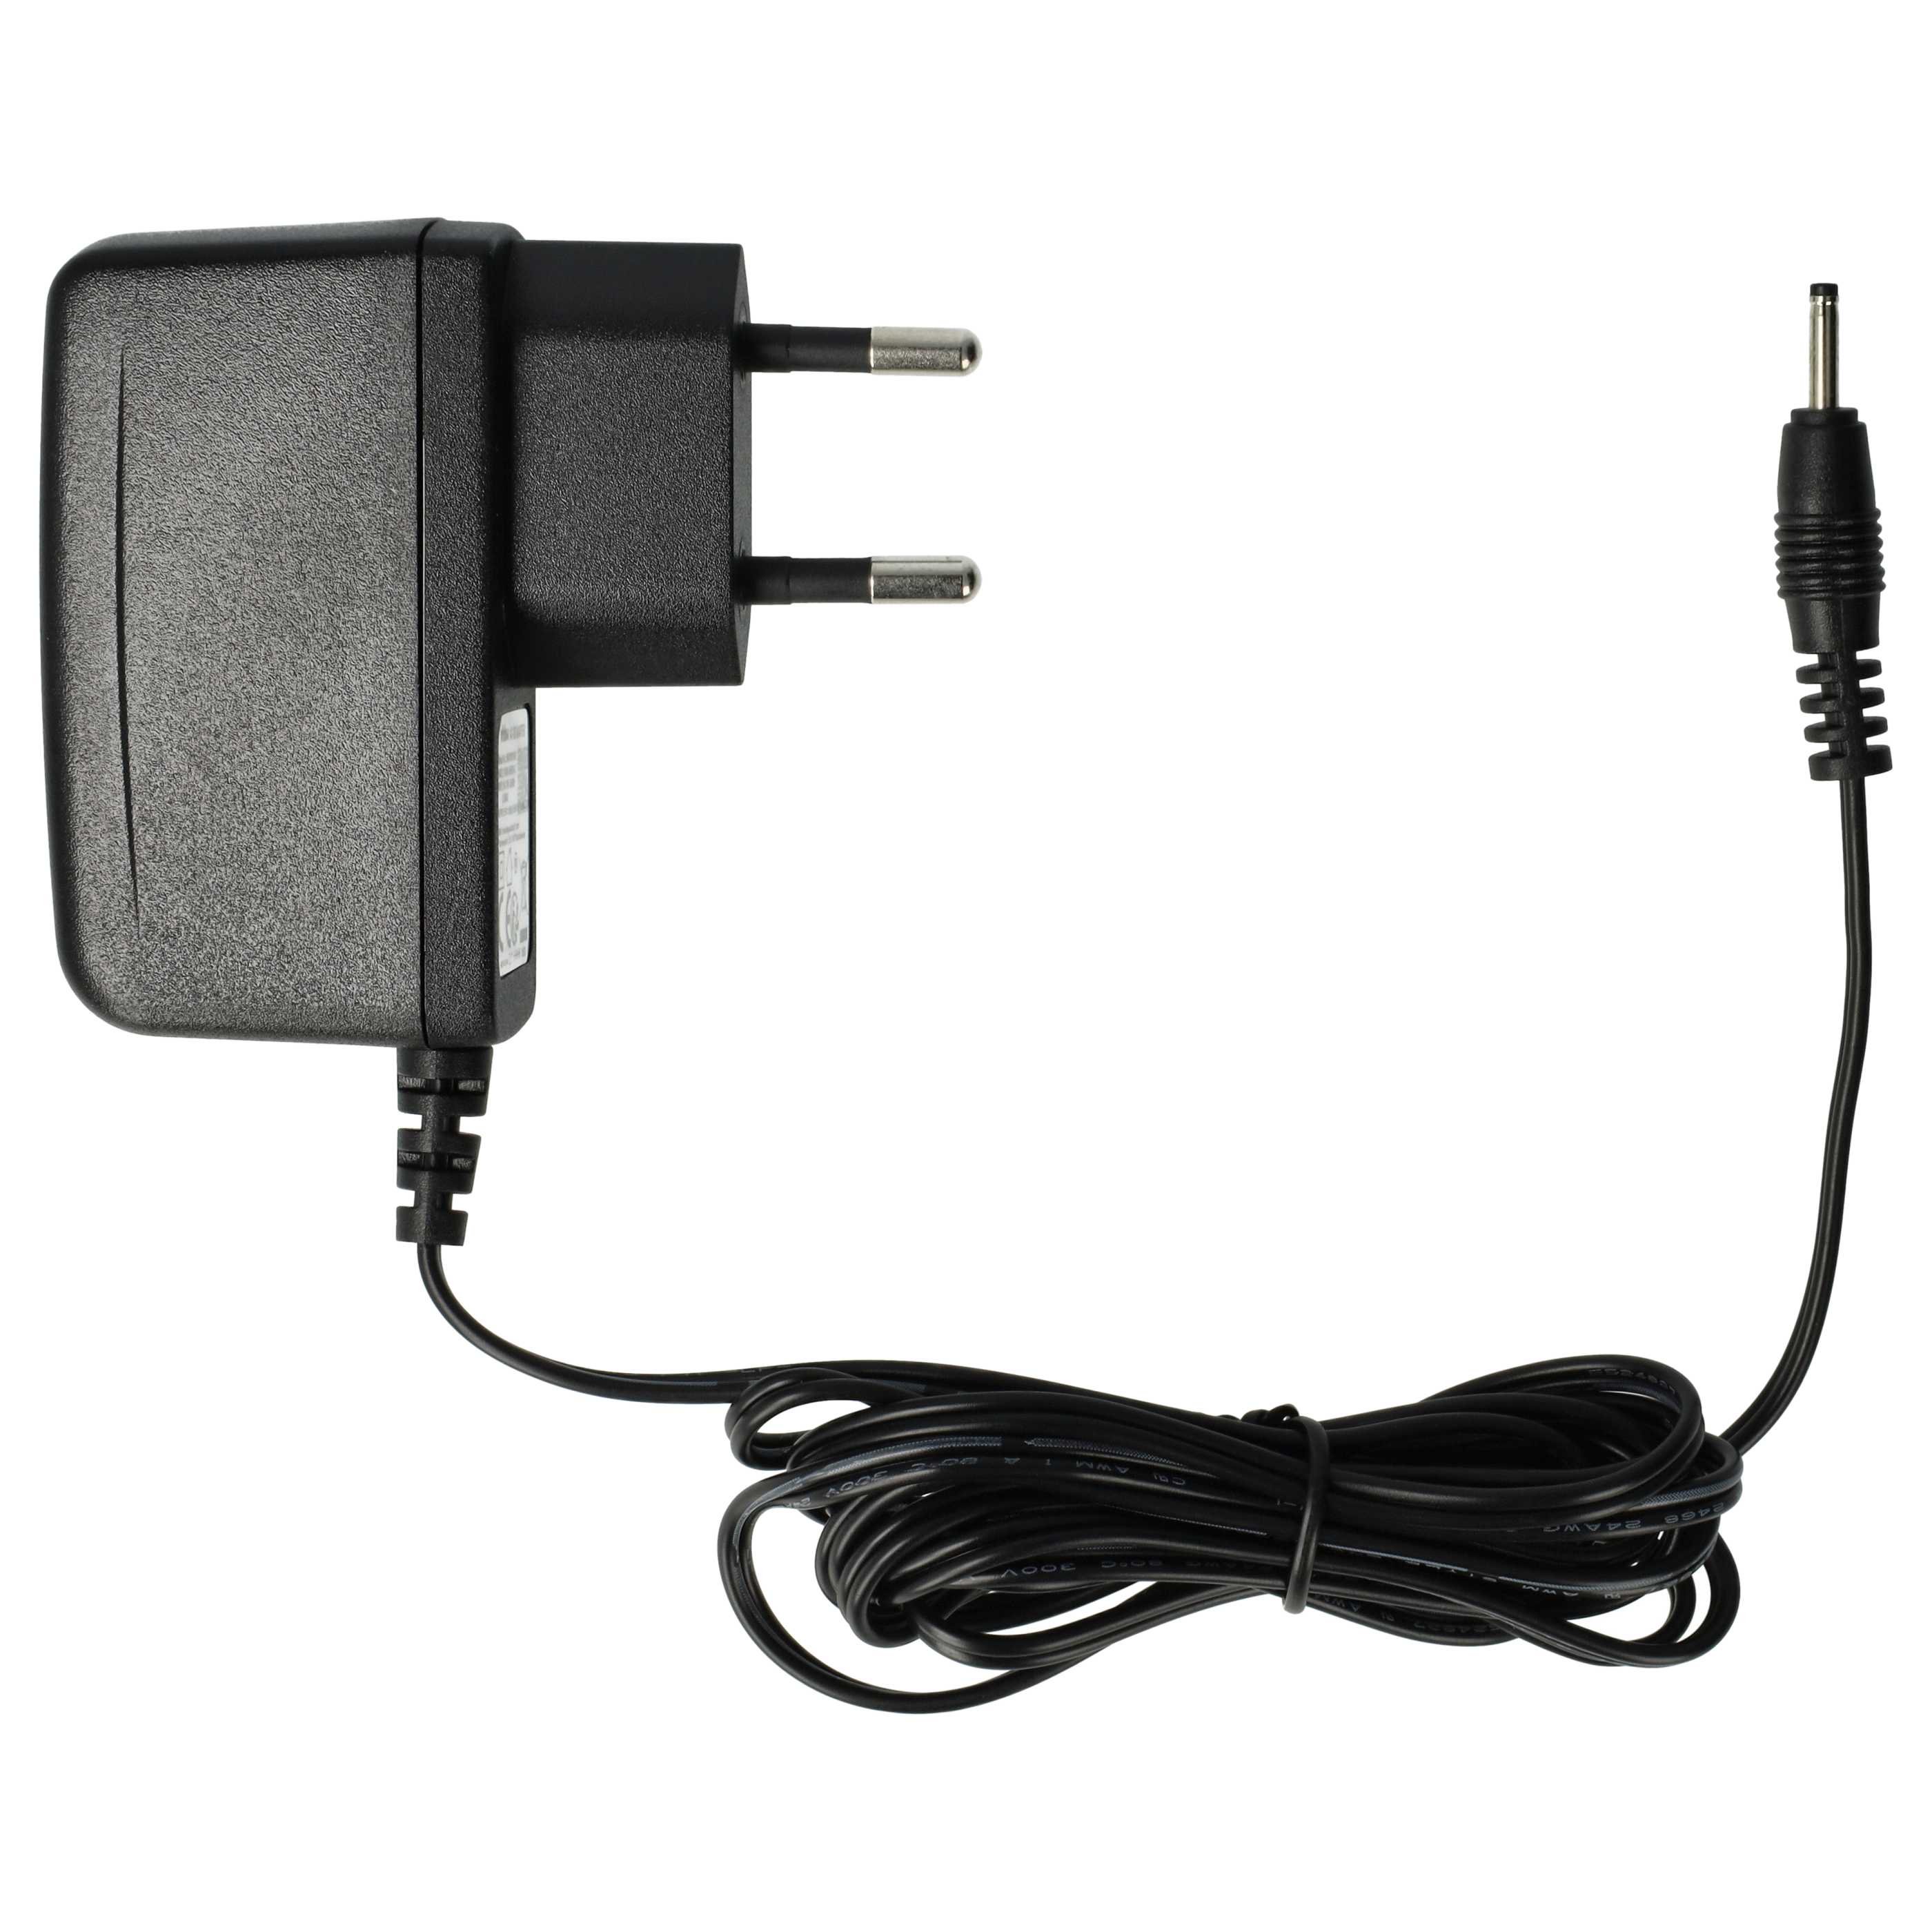 Mains Power Adapter replaces EPOS UNI PS EU 01, 094707, 1000703 for Sennheiser Headset, Earphones - 170 cm